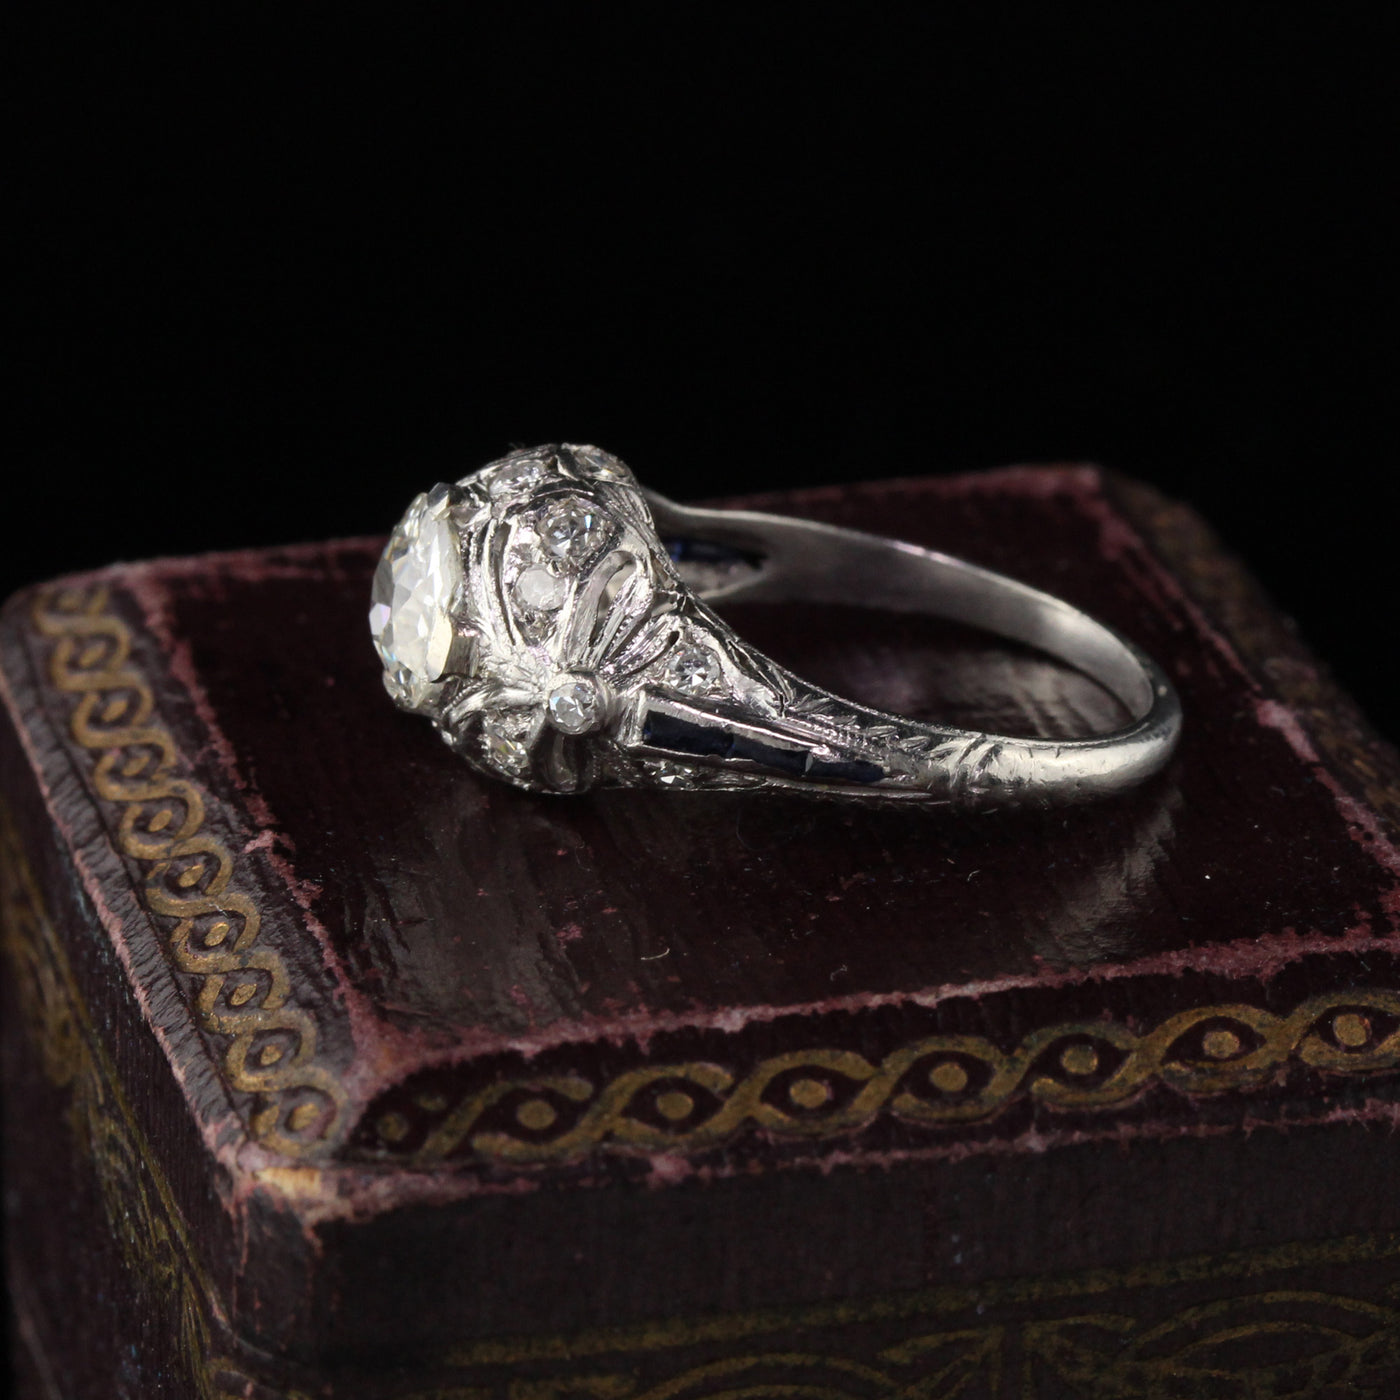 Antique Edwardian Platinum Old Mine Cut Diamond & Sapphire Engagement Ring